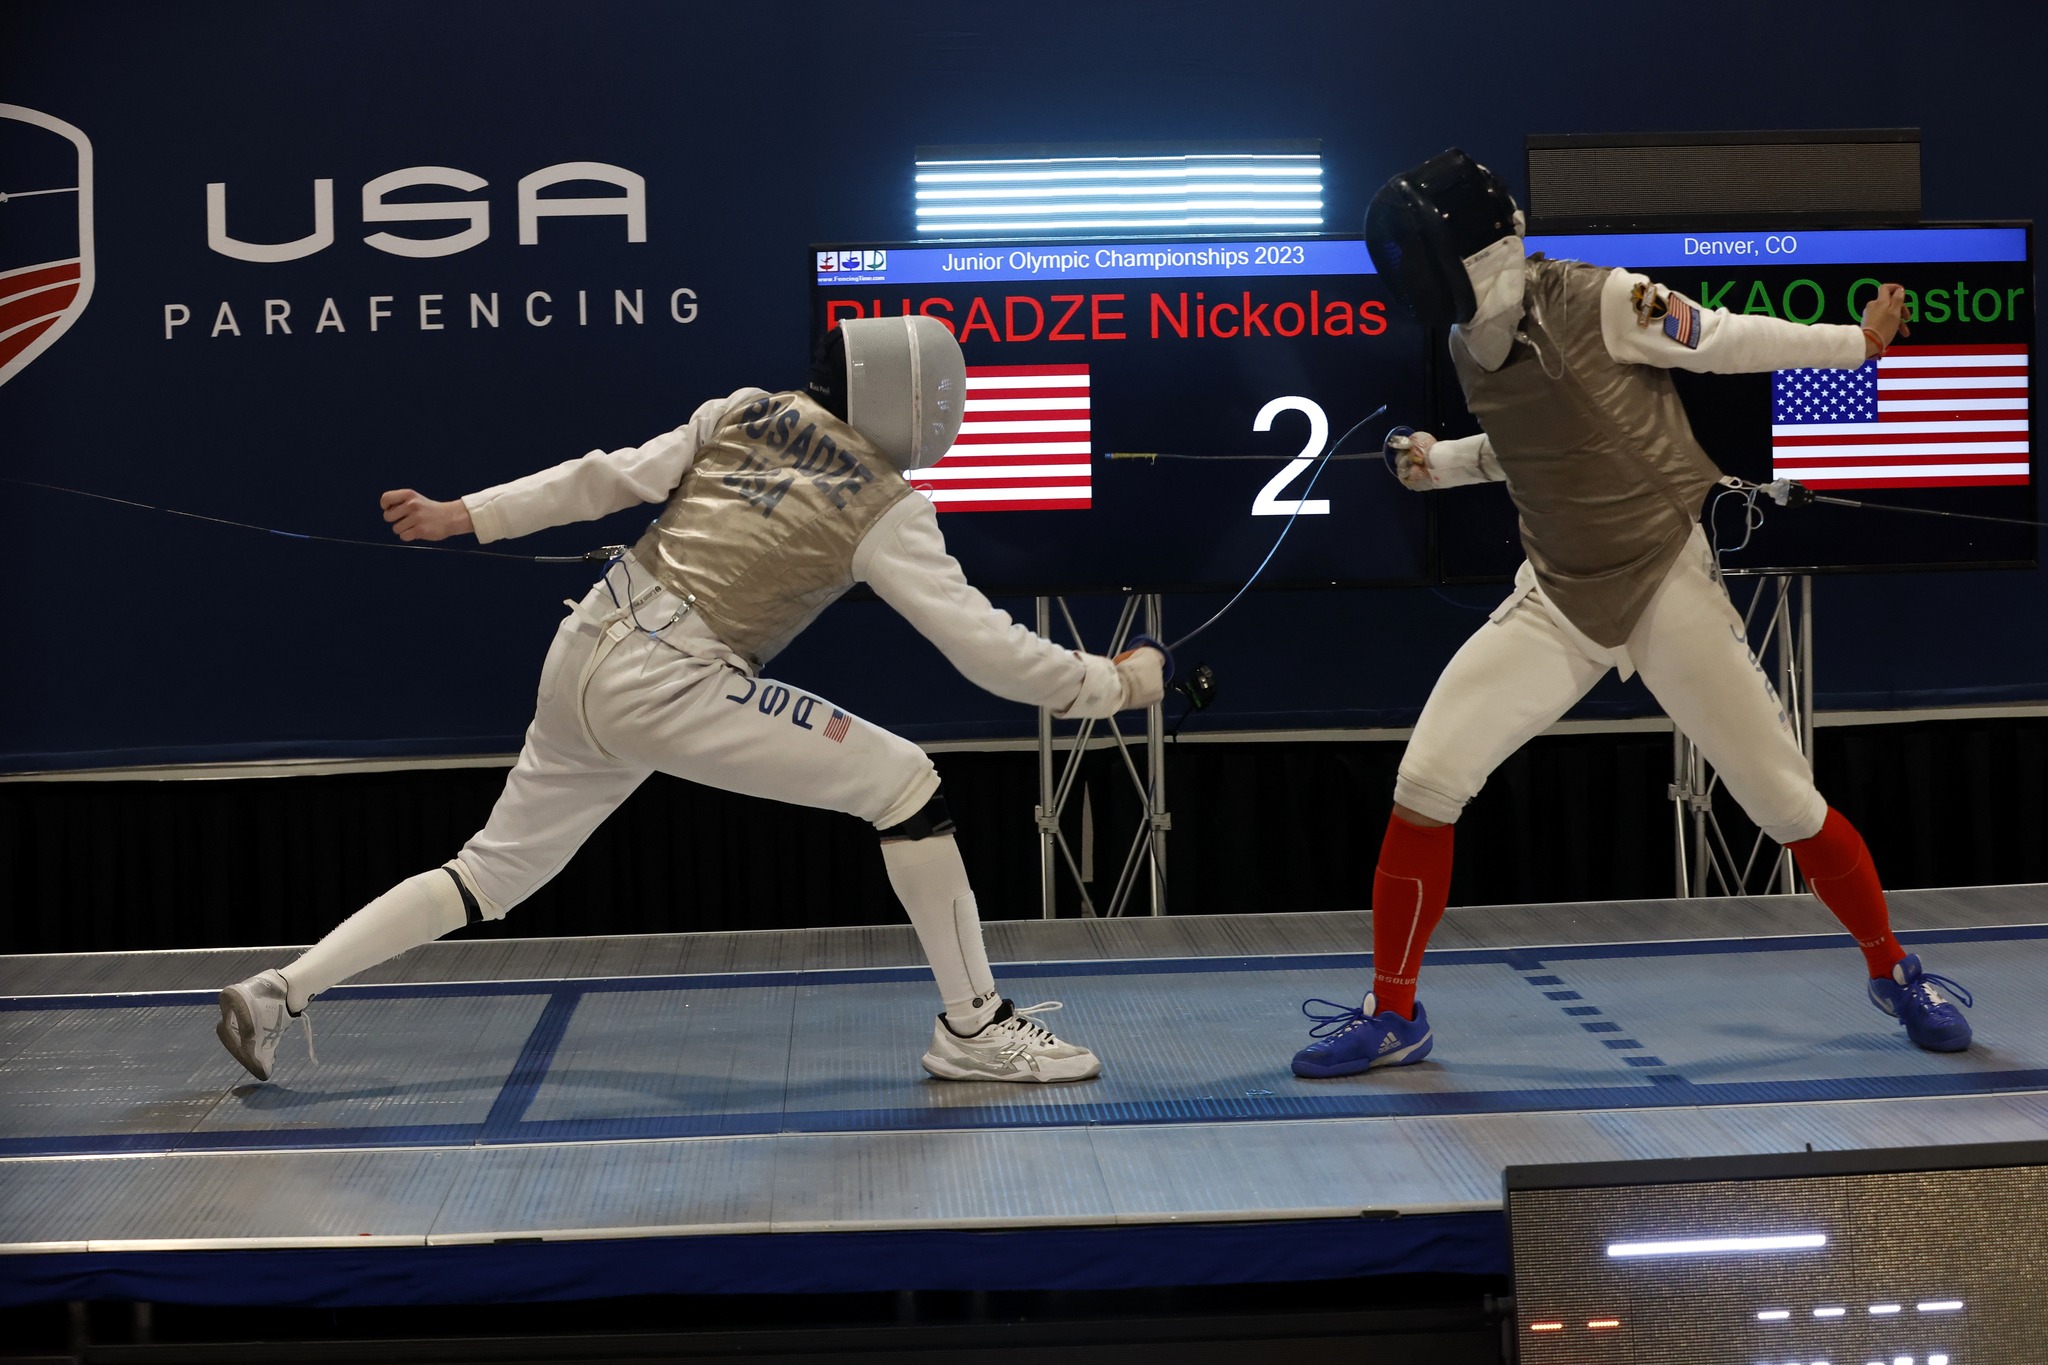 Tim Morehouse Fencing Club Fencer Nickolas Rusadze Wins Gold at USA